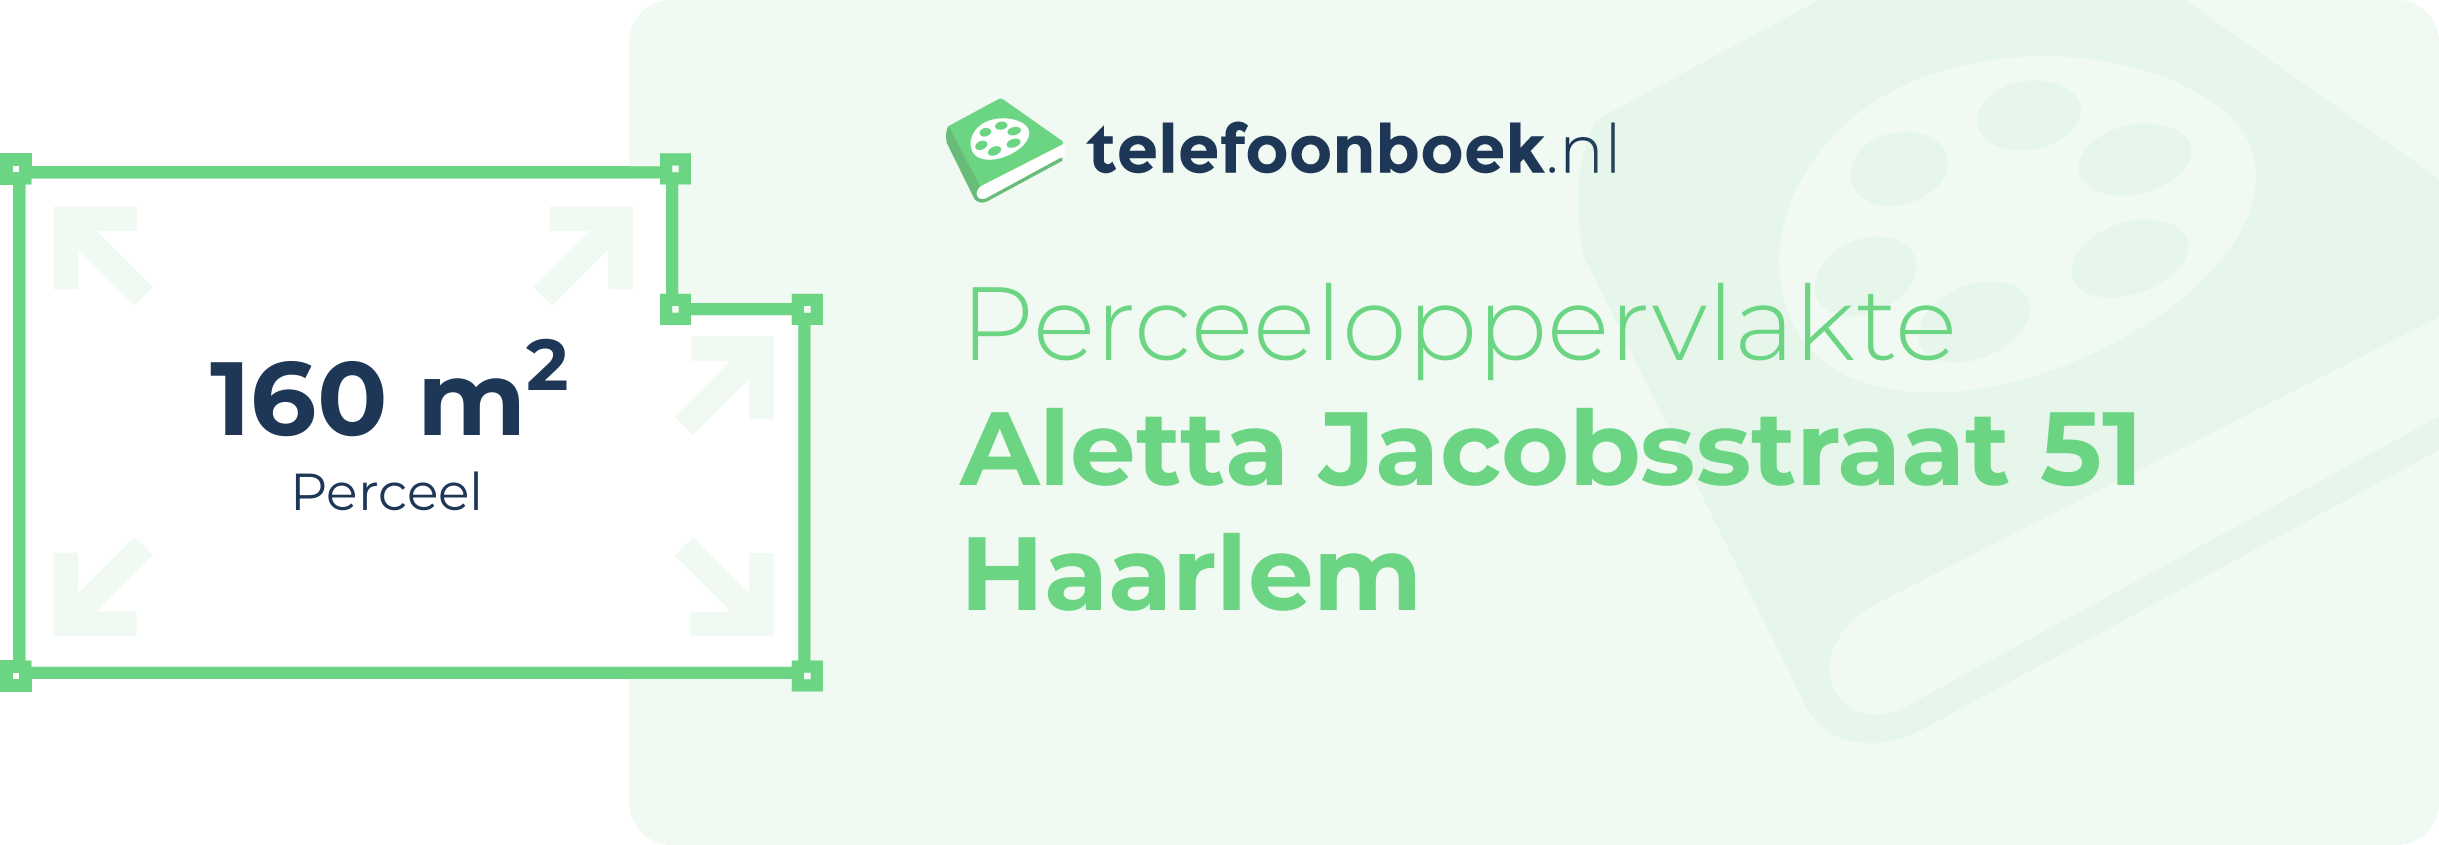 Perceeloppervlakte Aletta Jacobsstraat 51 Haarlem